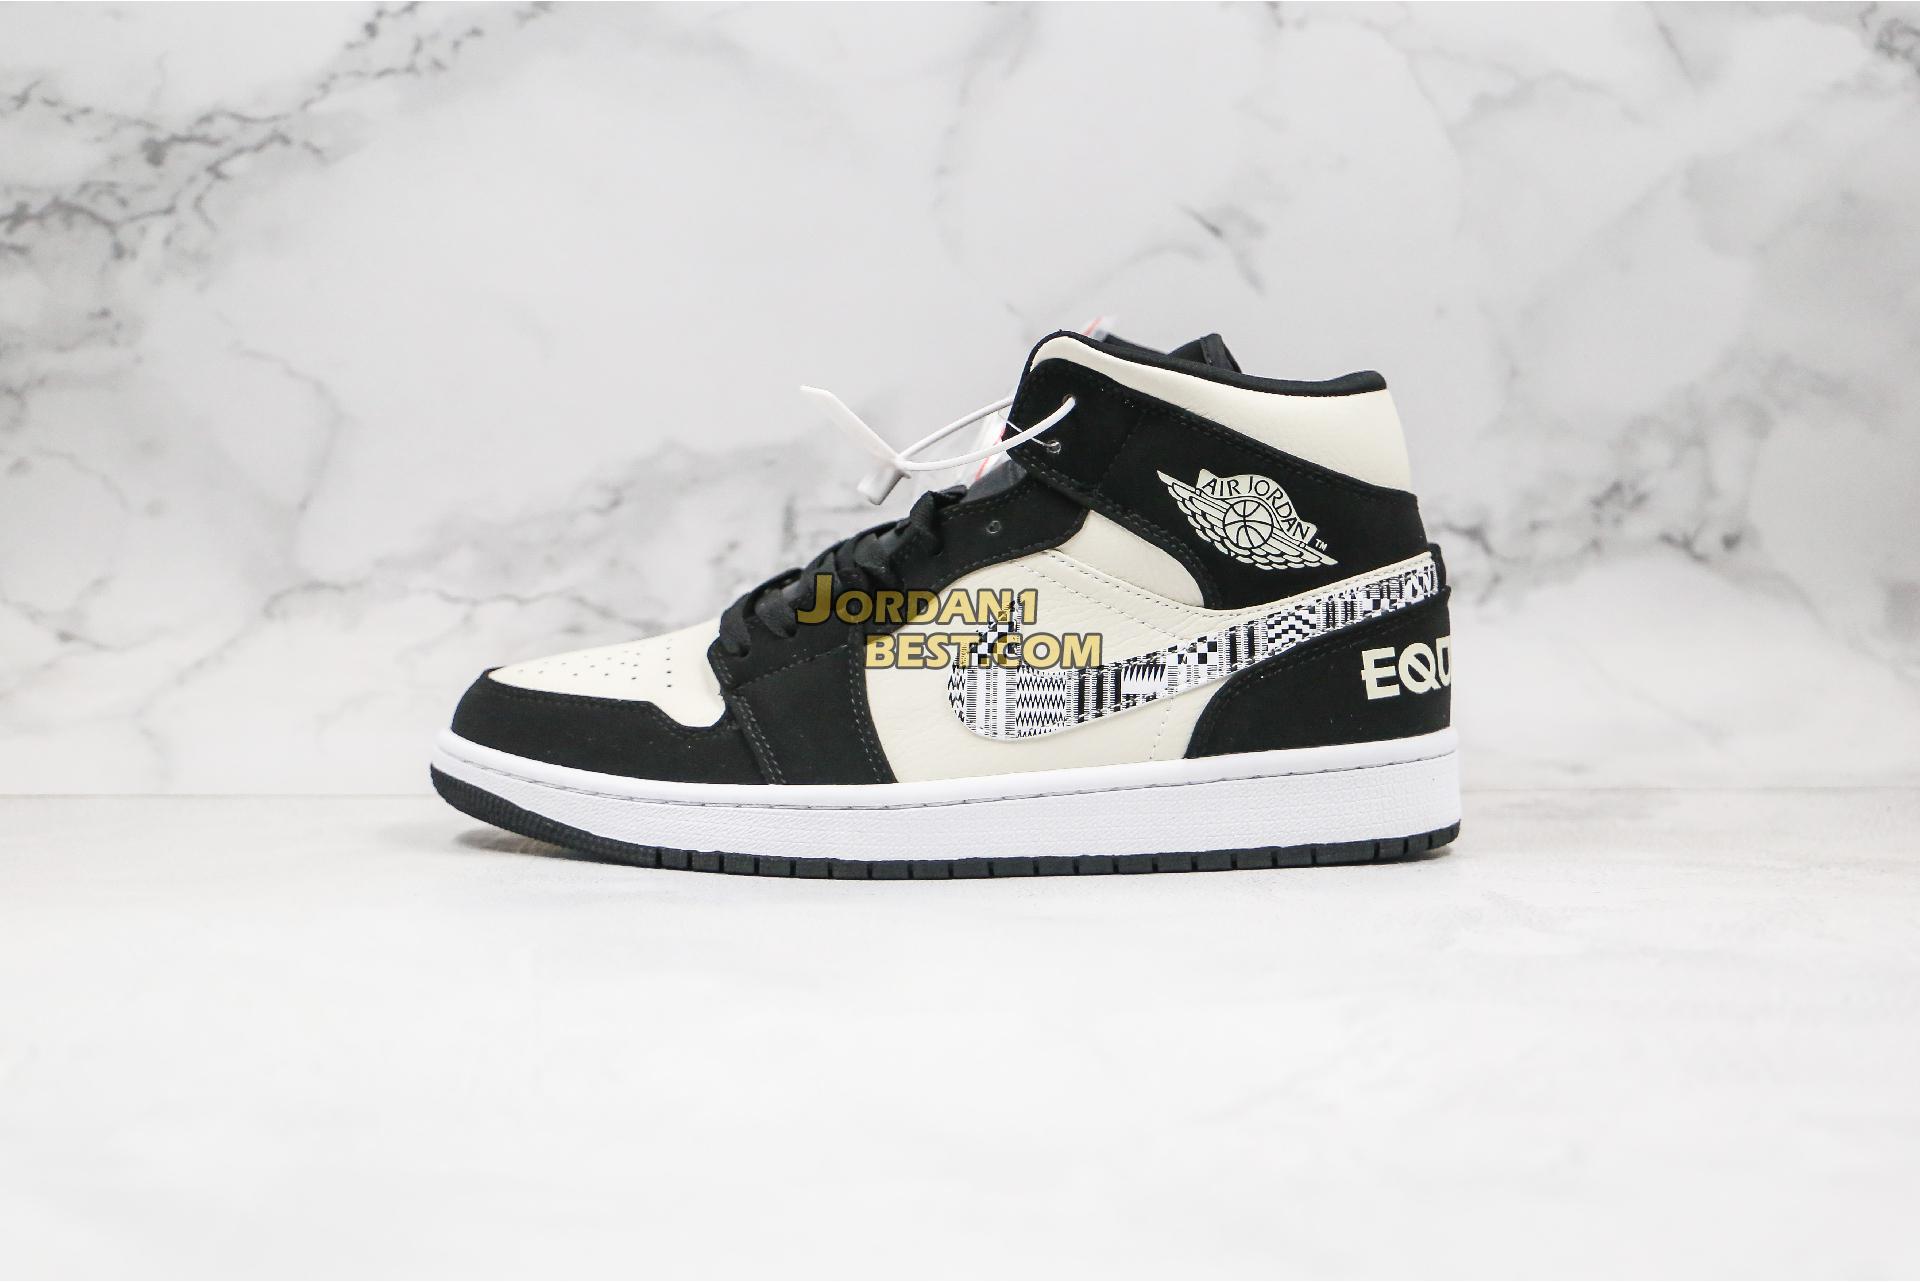 new replicas 2019 Air Jordan 1 Mid "Melo SE Equality" 852542-010 Mens black/black-sail-wolf grey Shoes replicas On Wholesale Sale Online